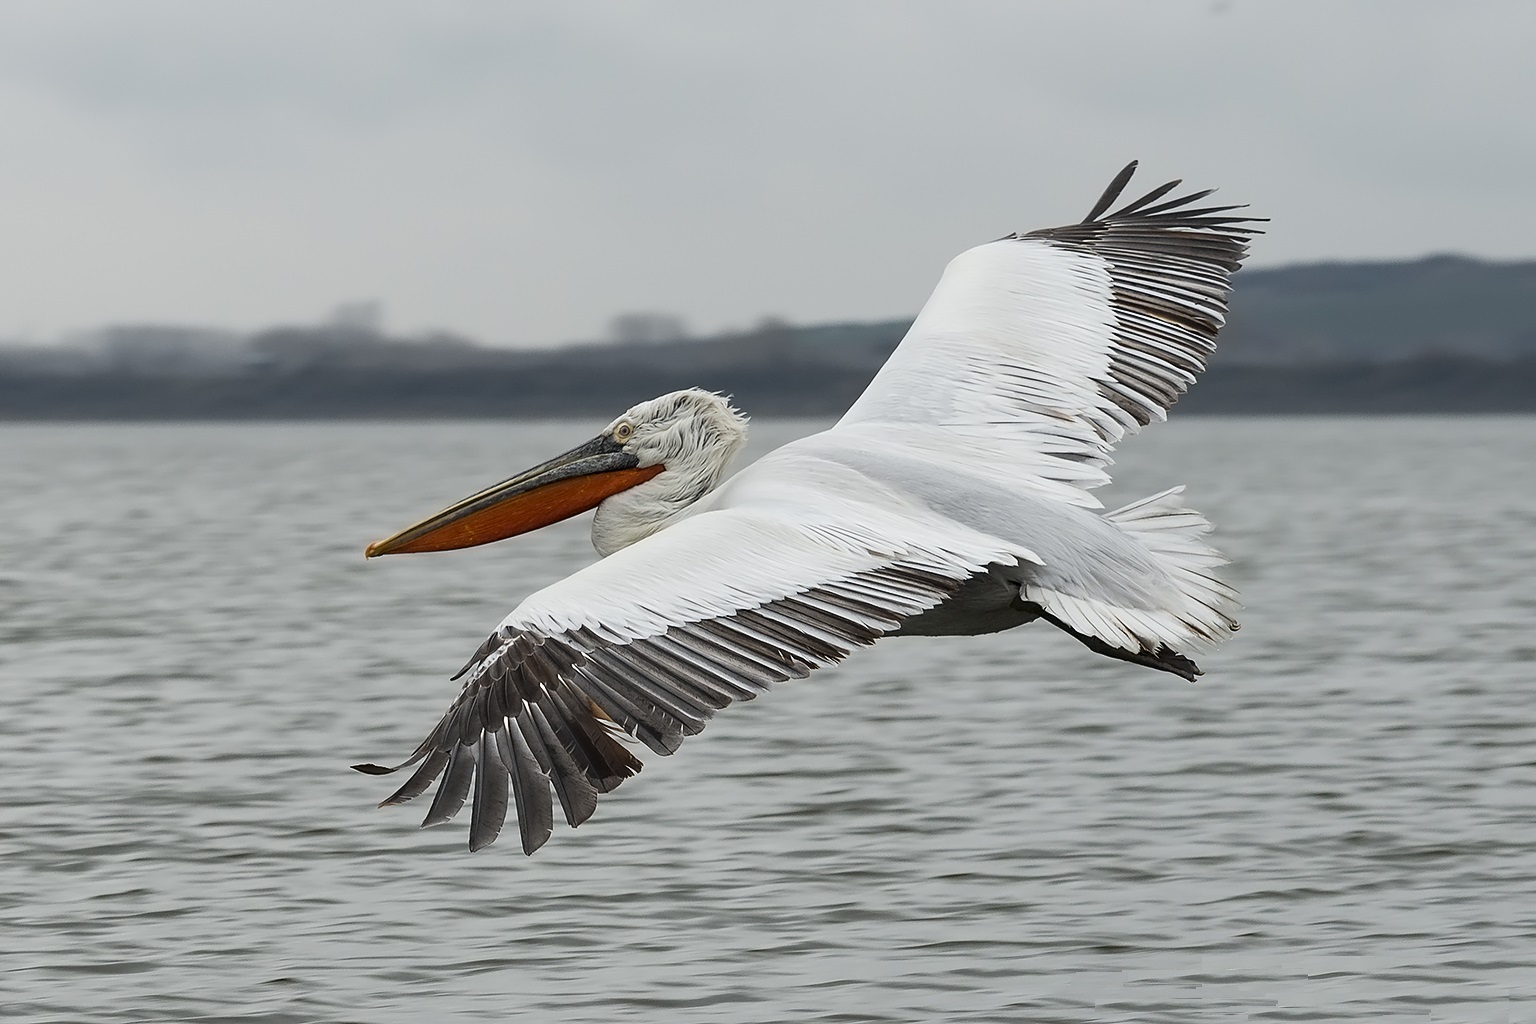 Curly pelican in flight